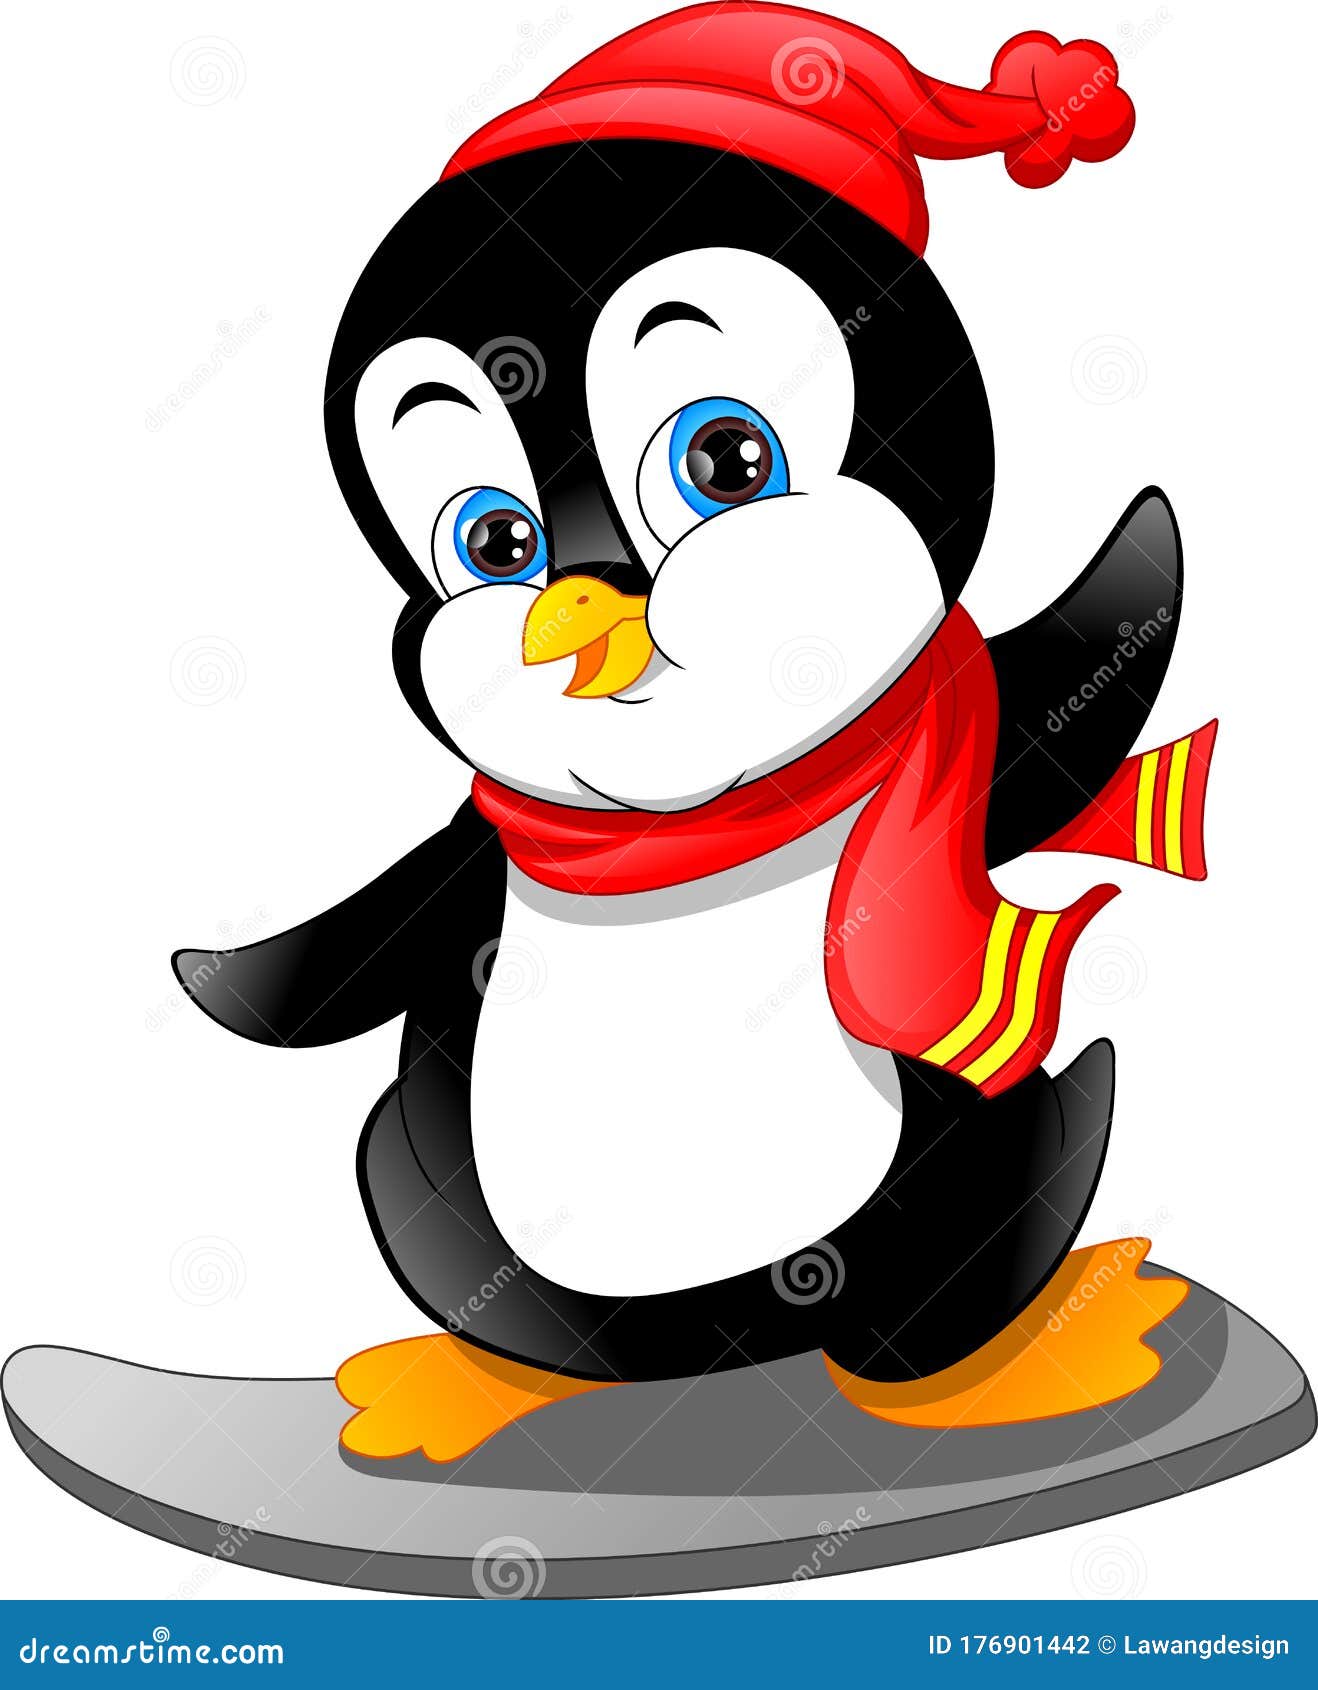 Details about   Penguin Skiing Sticker Portrait